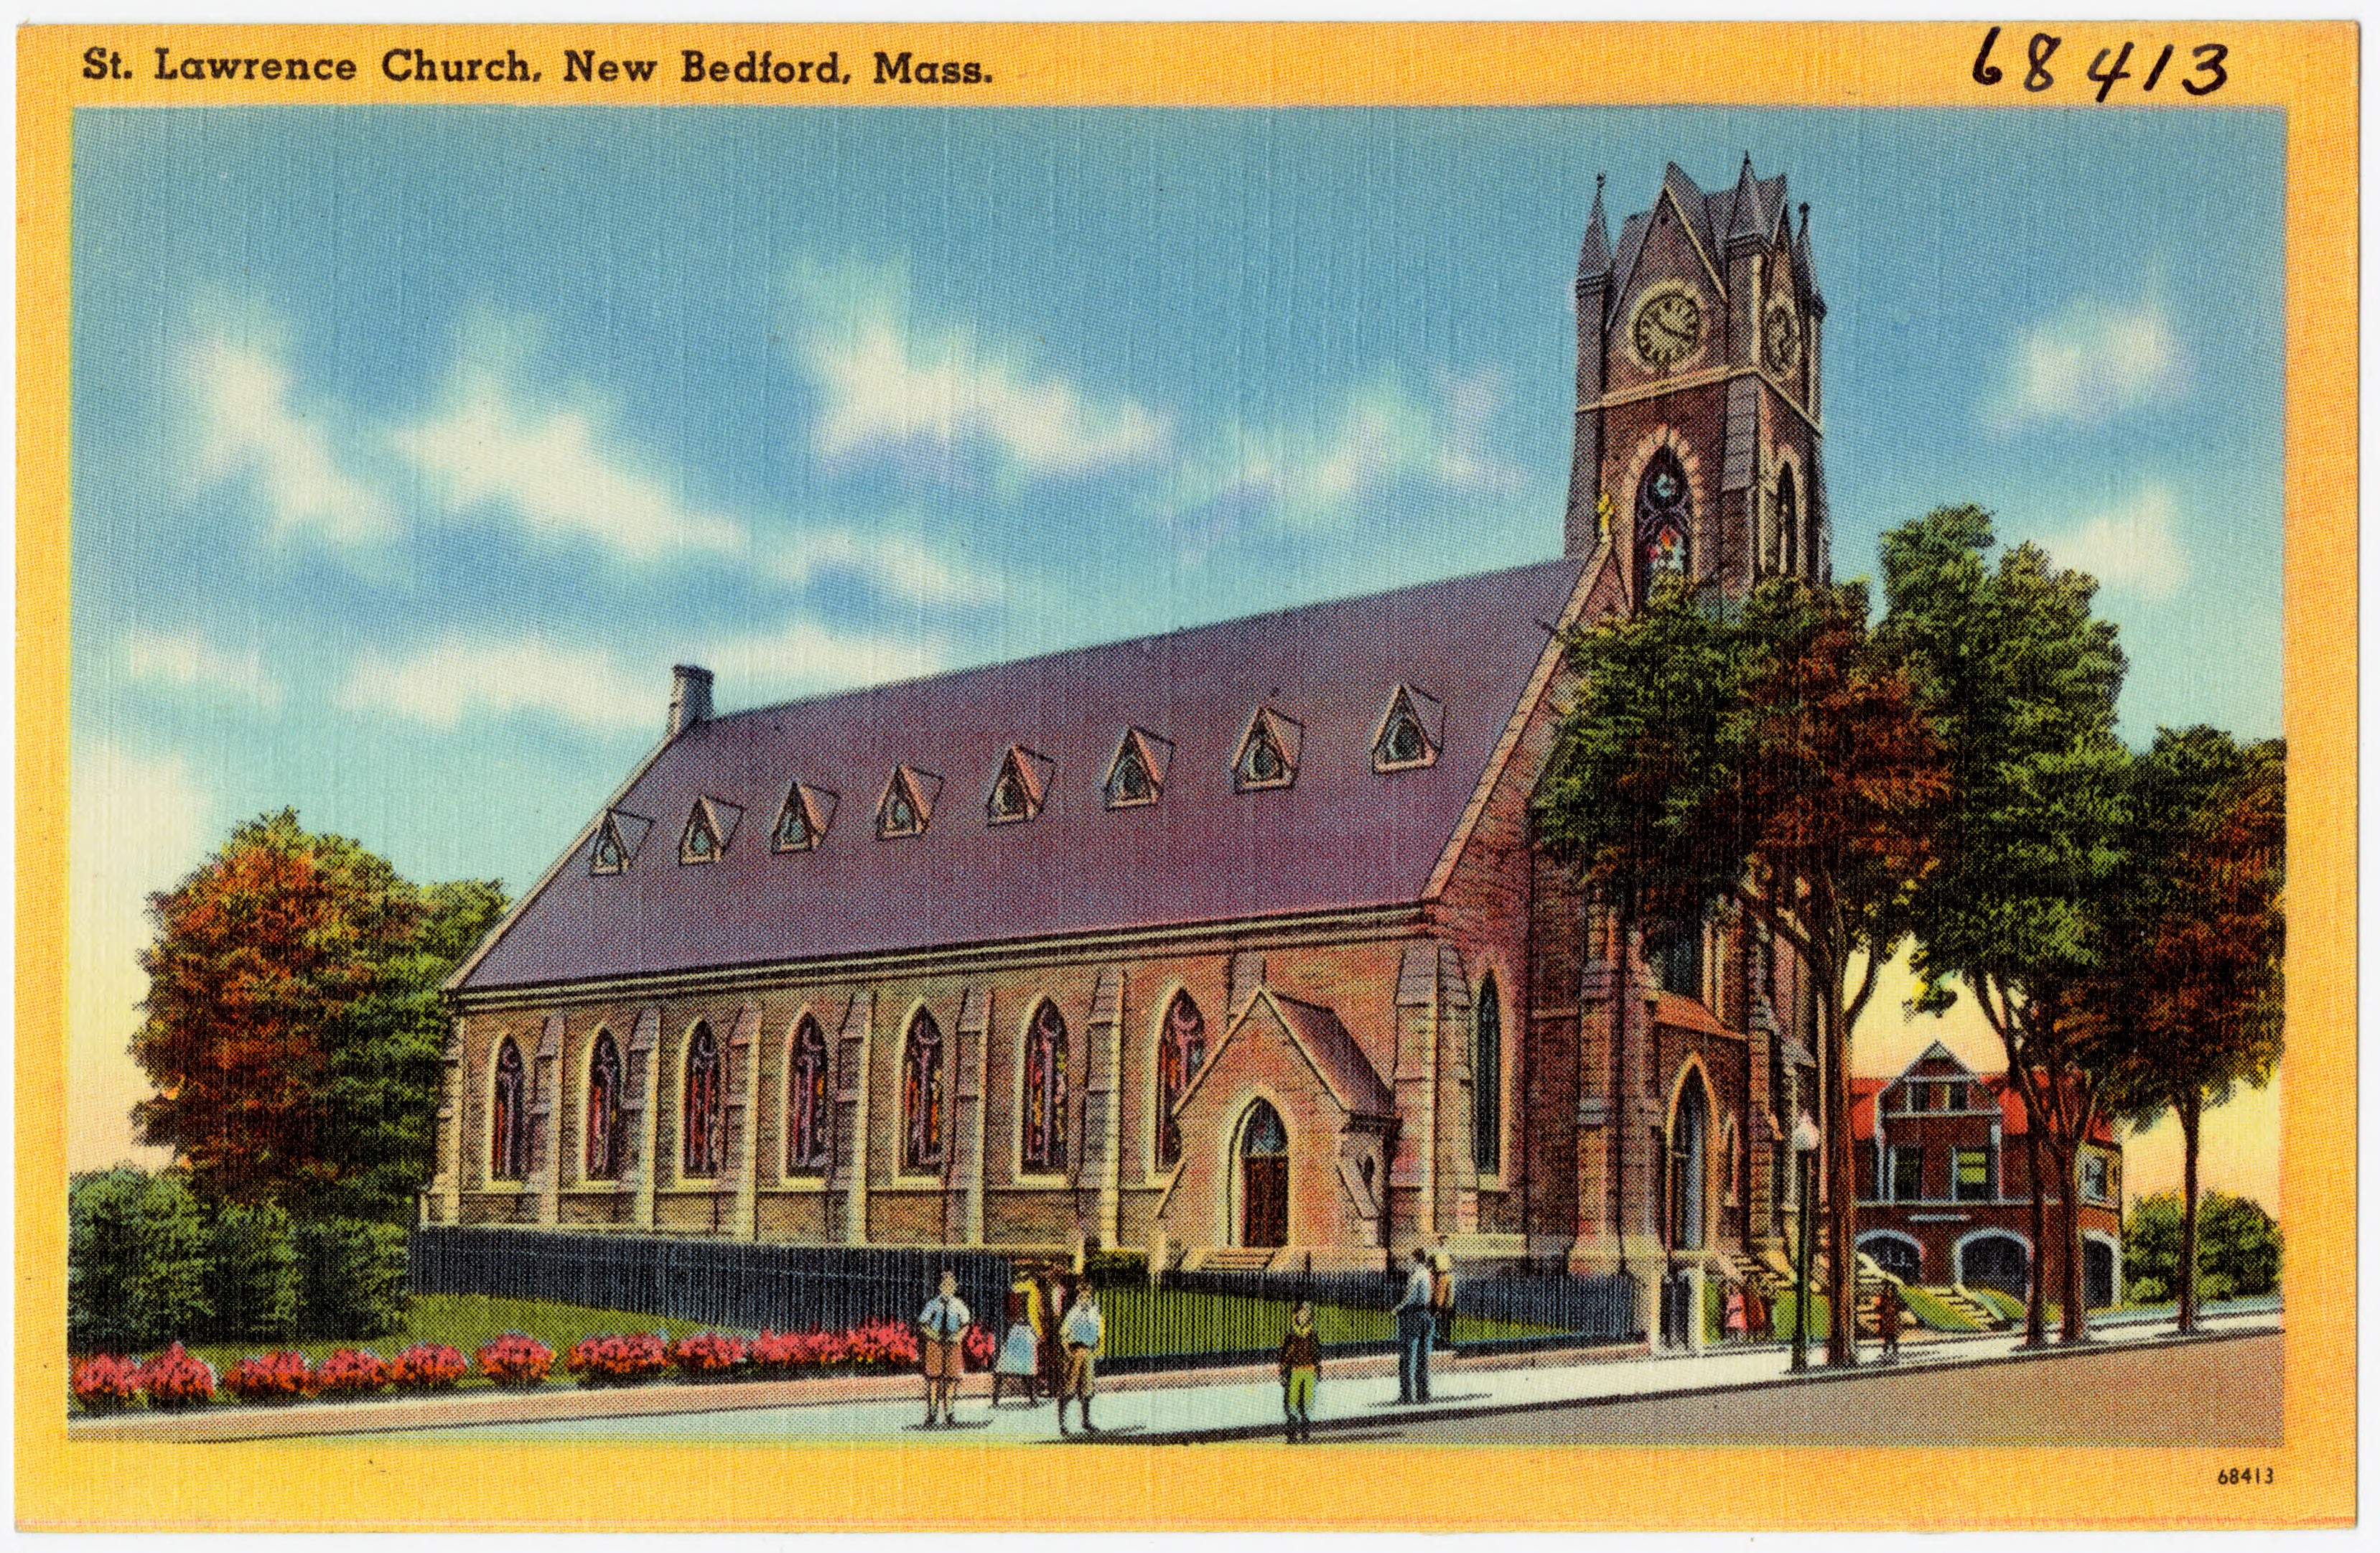 St. Lawrence Church, New Bedford, Mass (68413).jpg.